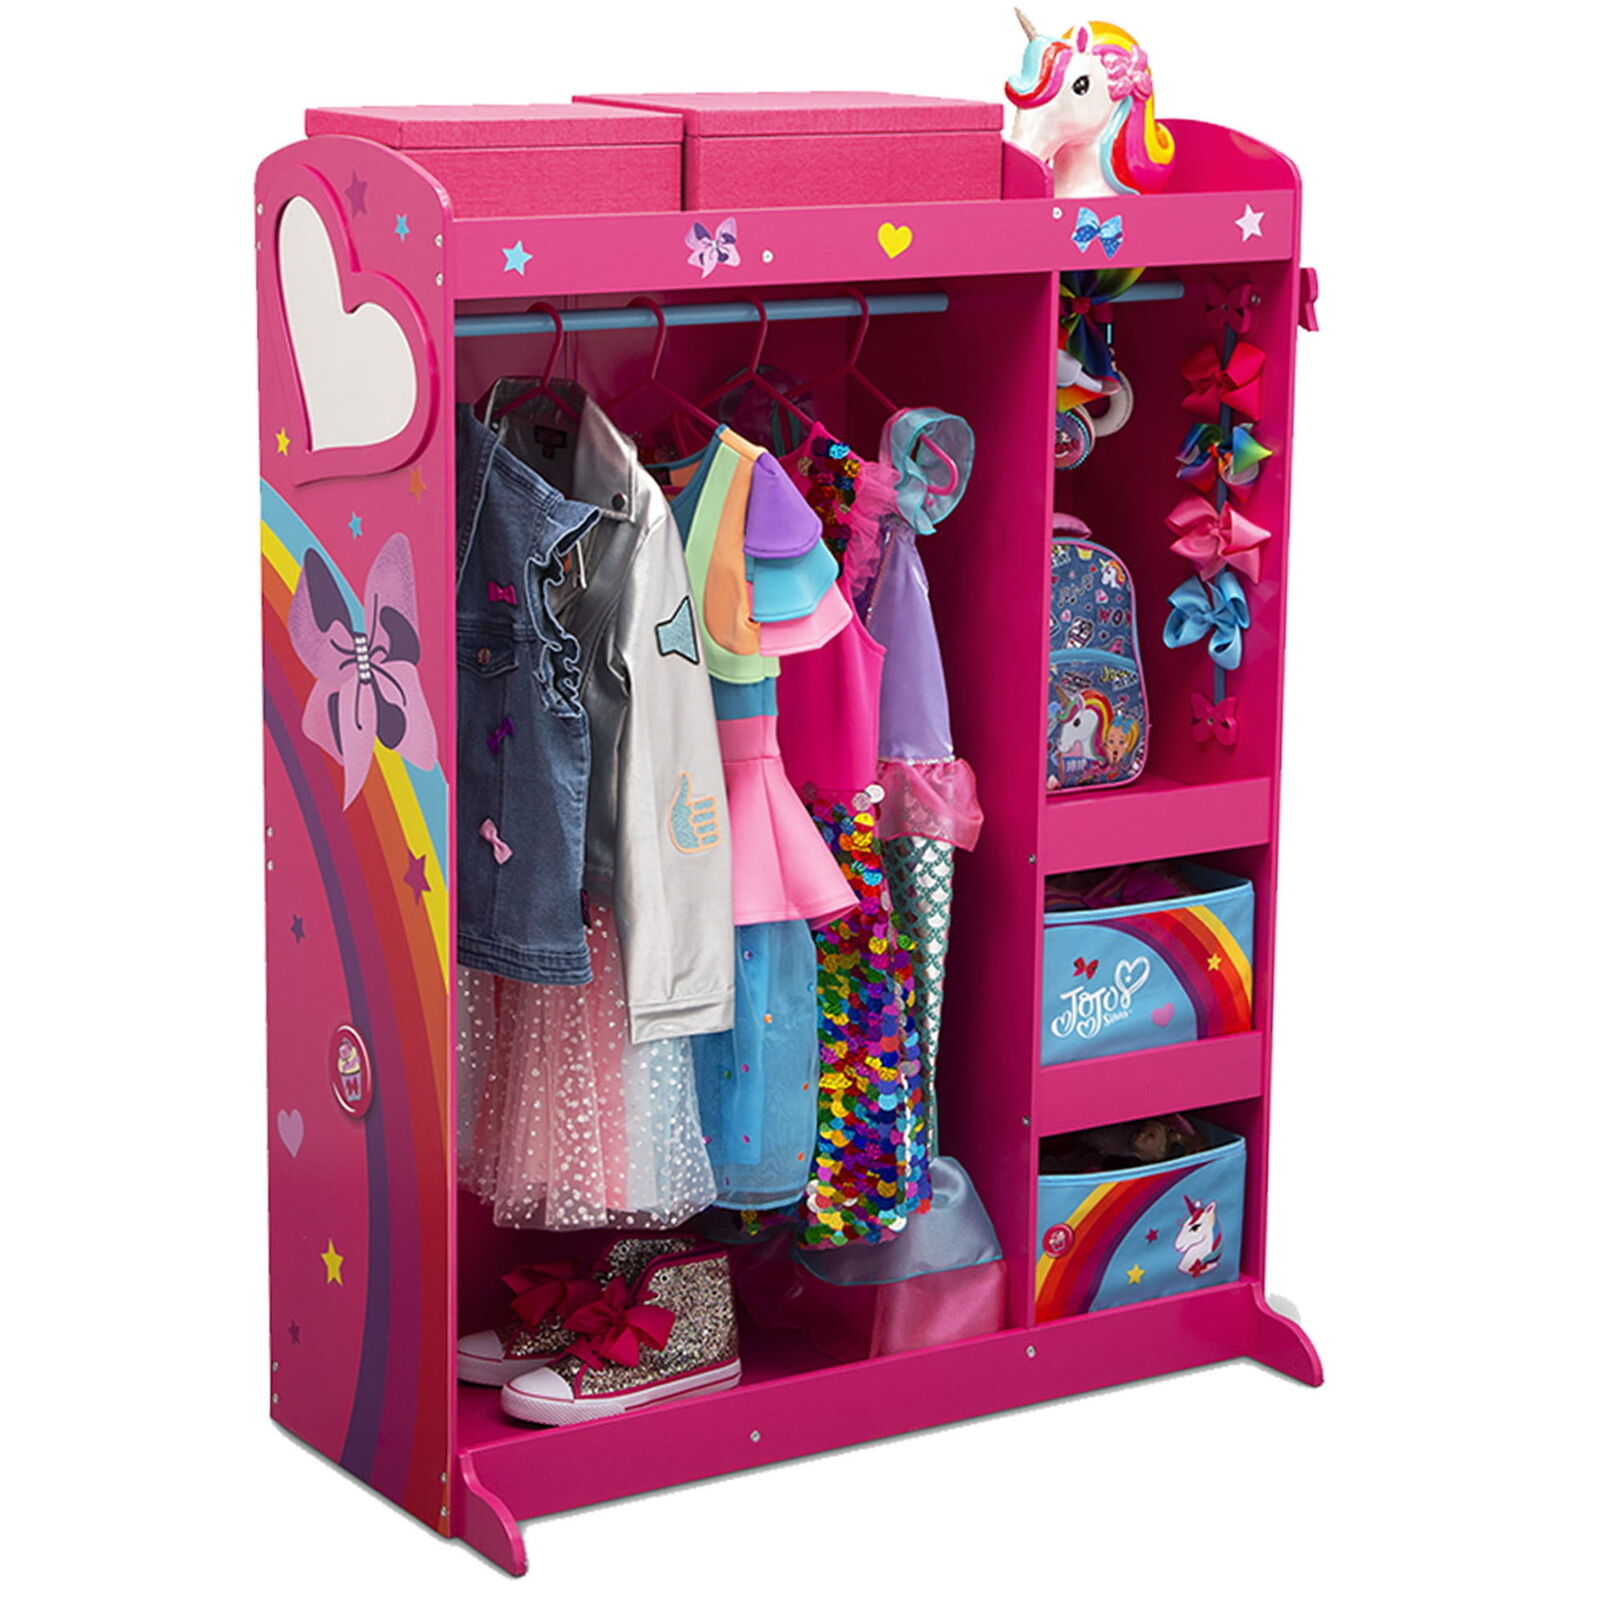 Dress & Playboutique Pretend Play Costume Storage Wardrobe Kids Mirror & Shelves